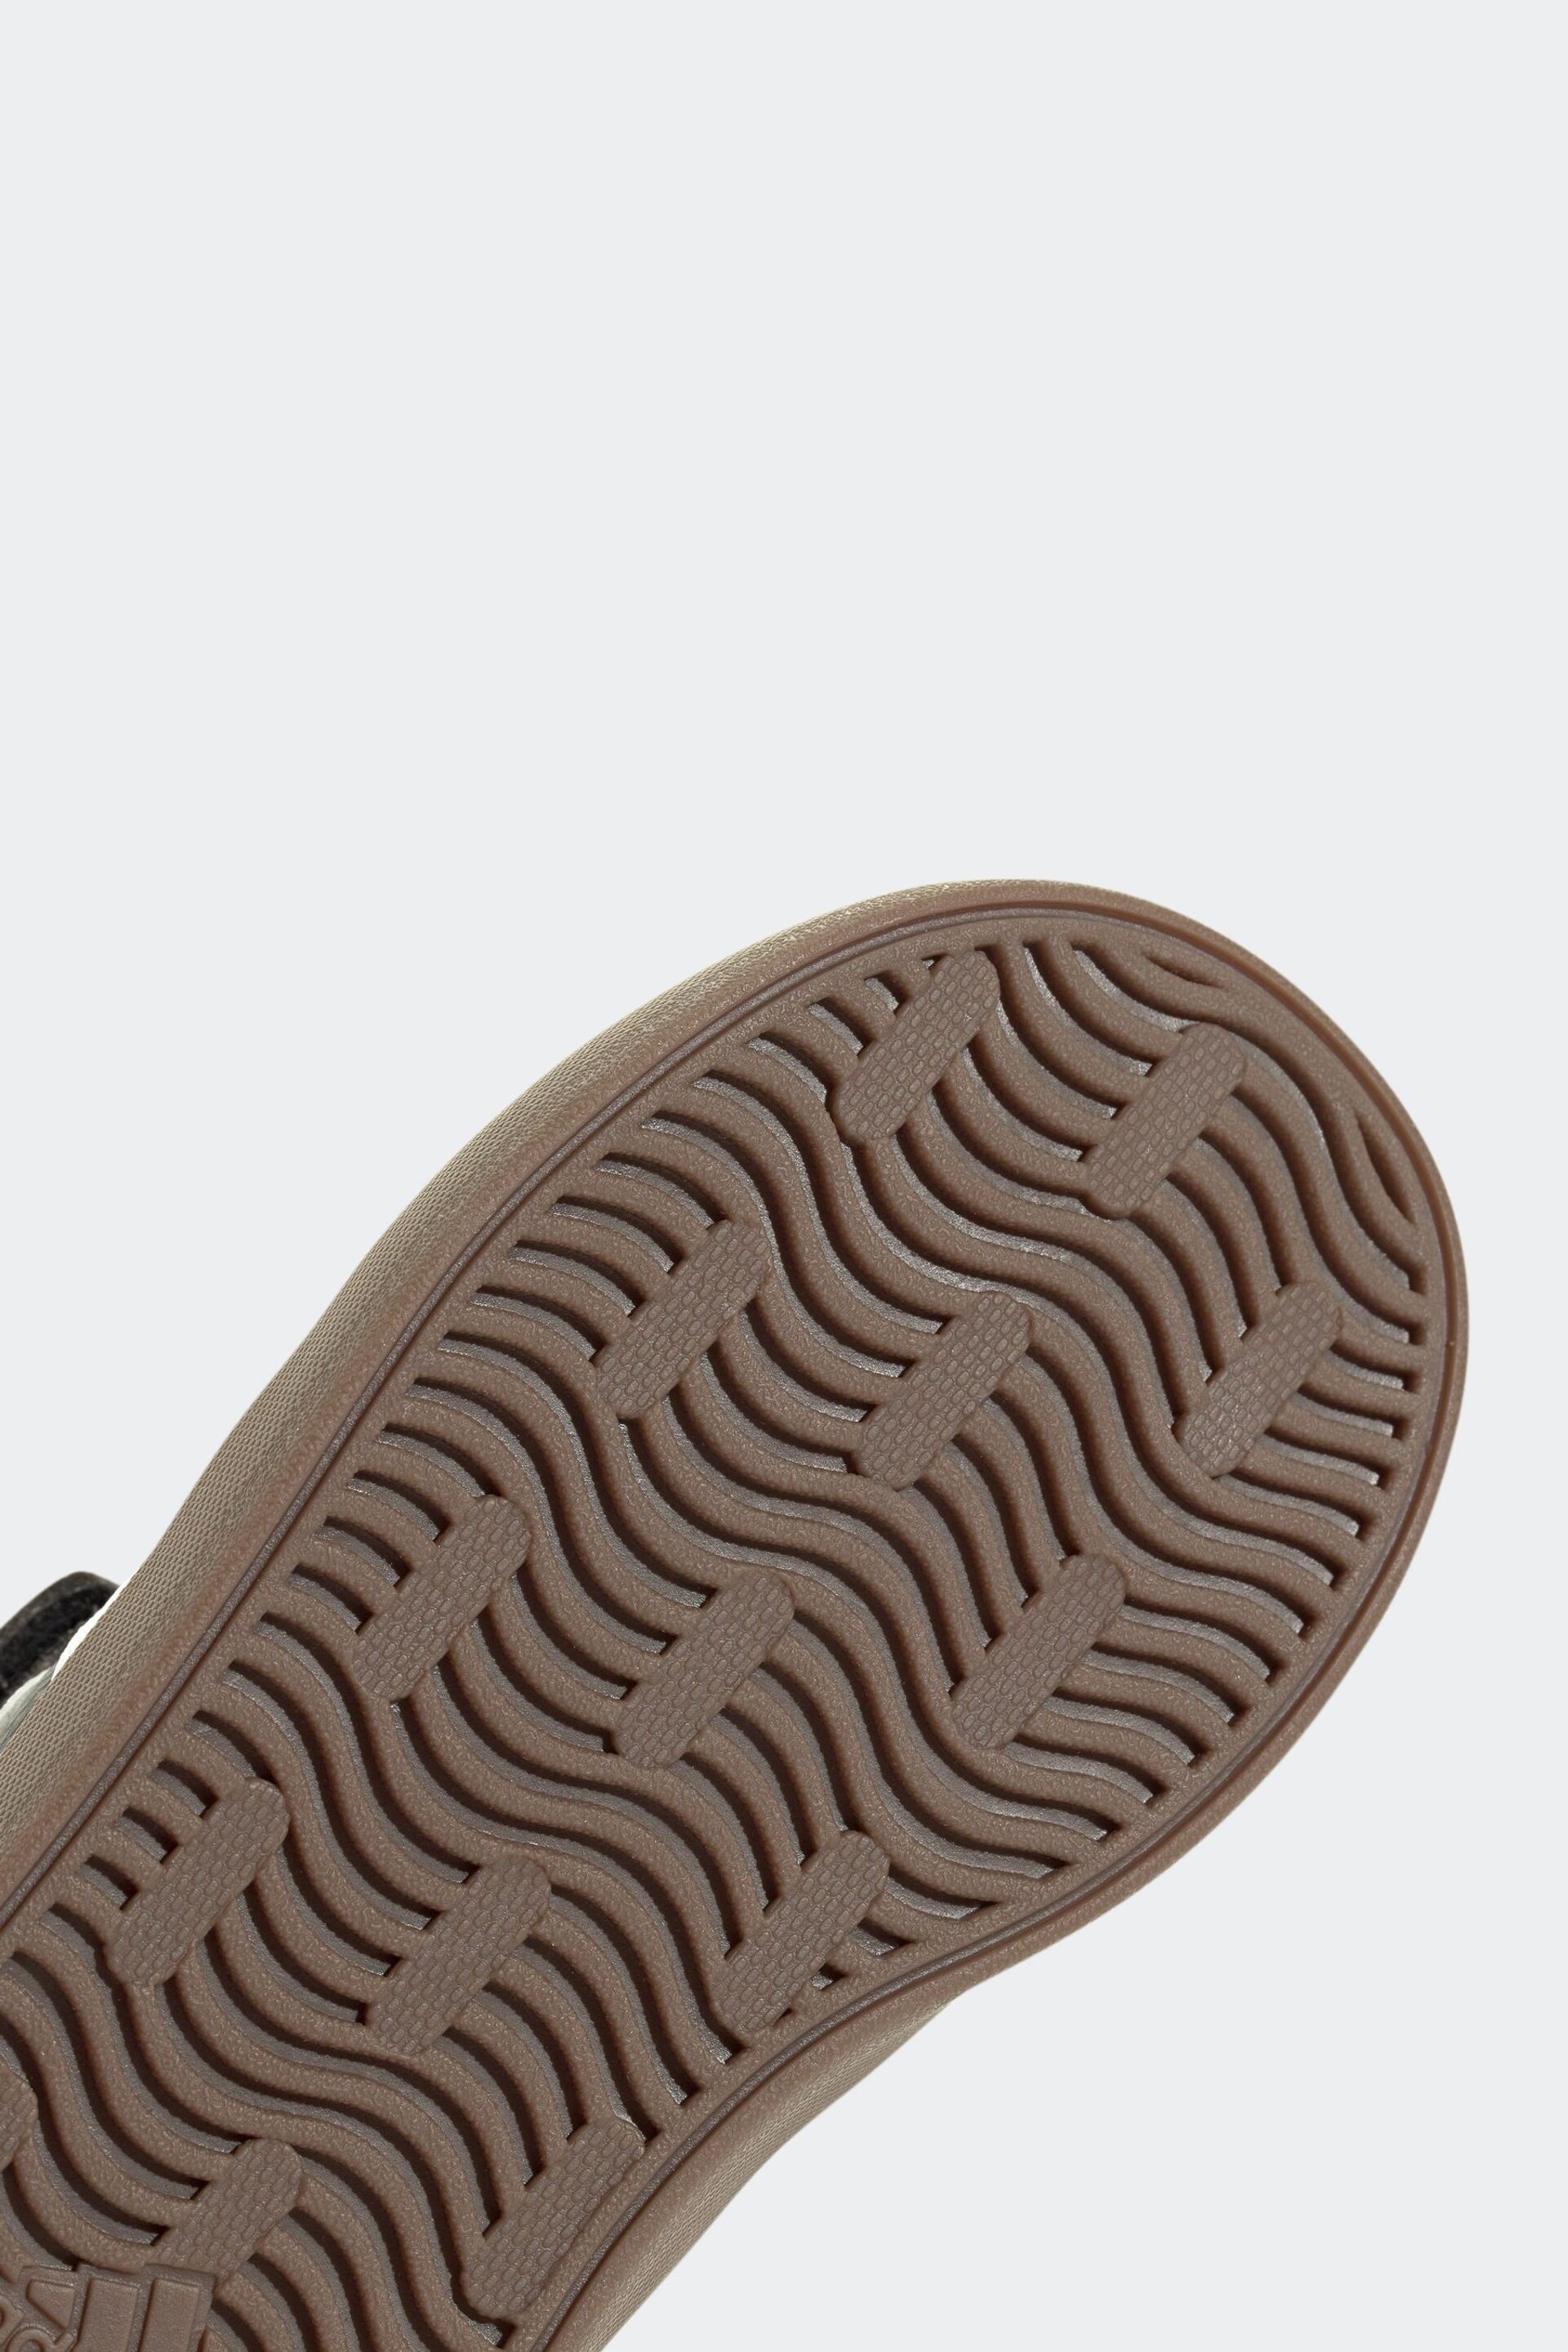 adidas Black/White VL Court 3.0 Skateboarding Shoes Kids - Image 10 of 10